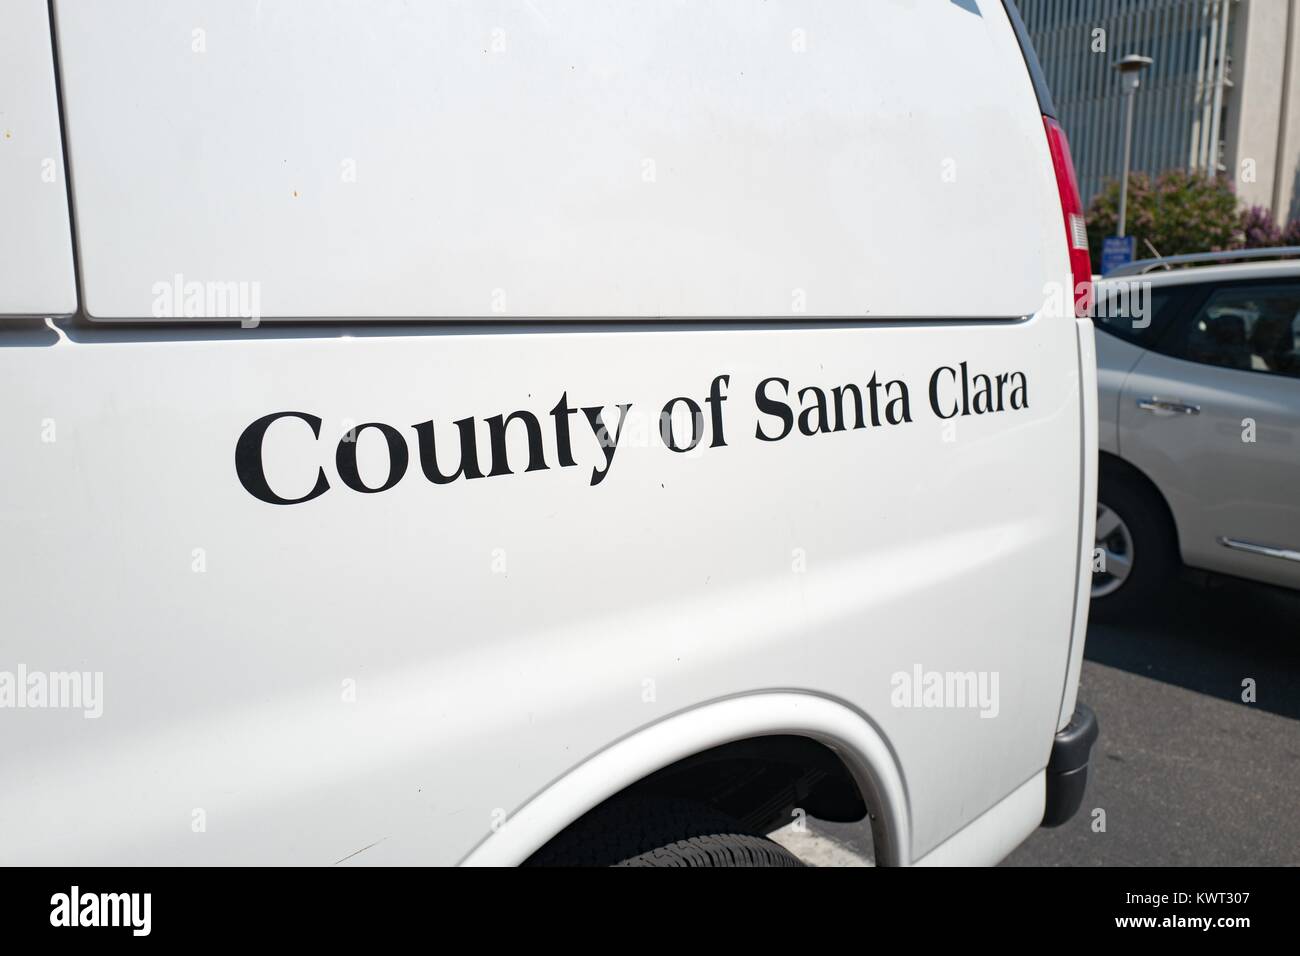 Text reading County of Santa Clara on a municipal vehicle in San Jose, California, August 17, 2017. Stock Photo